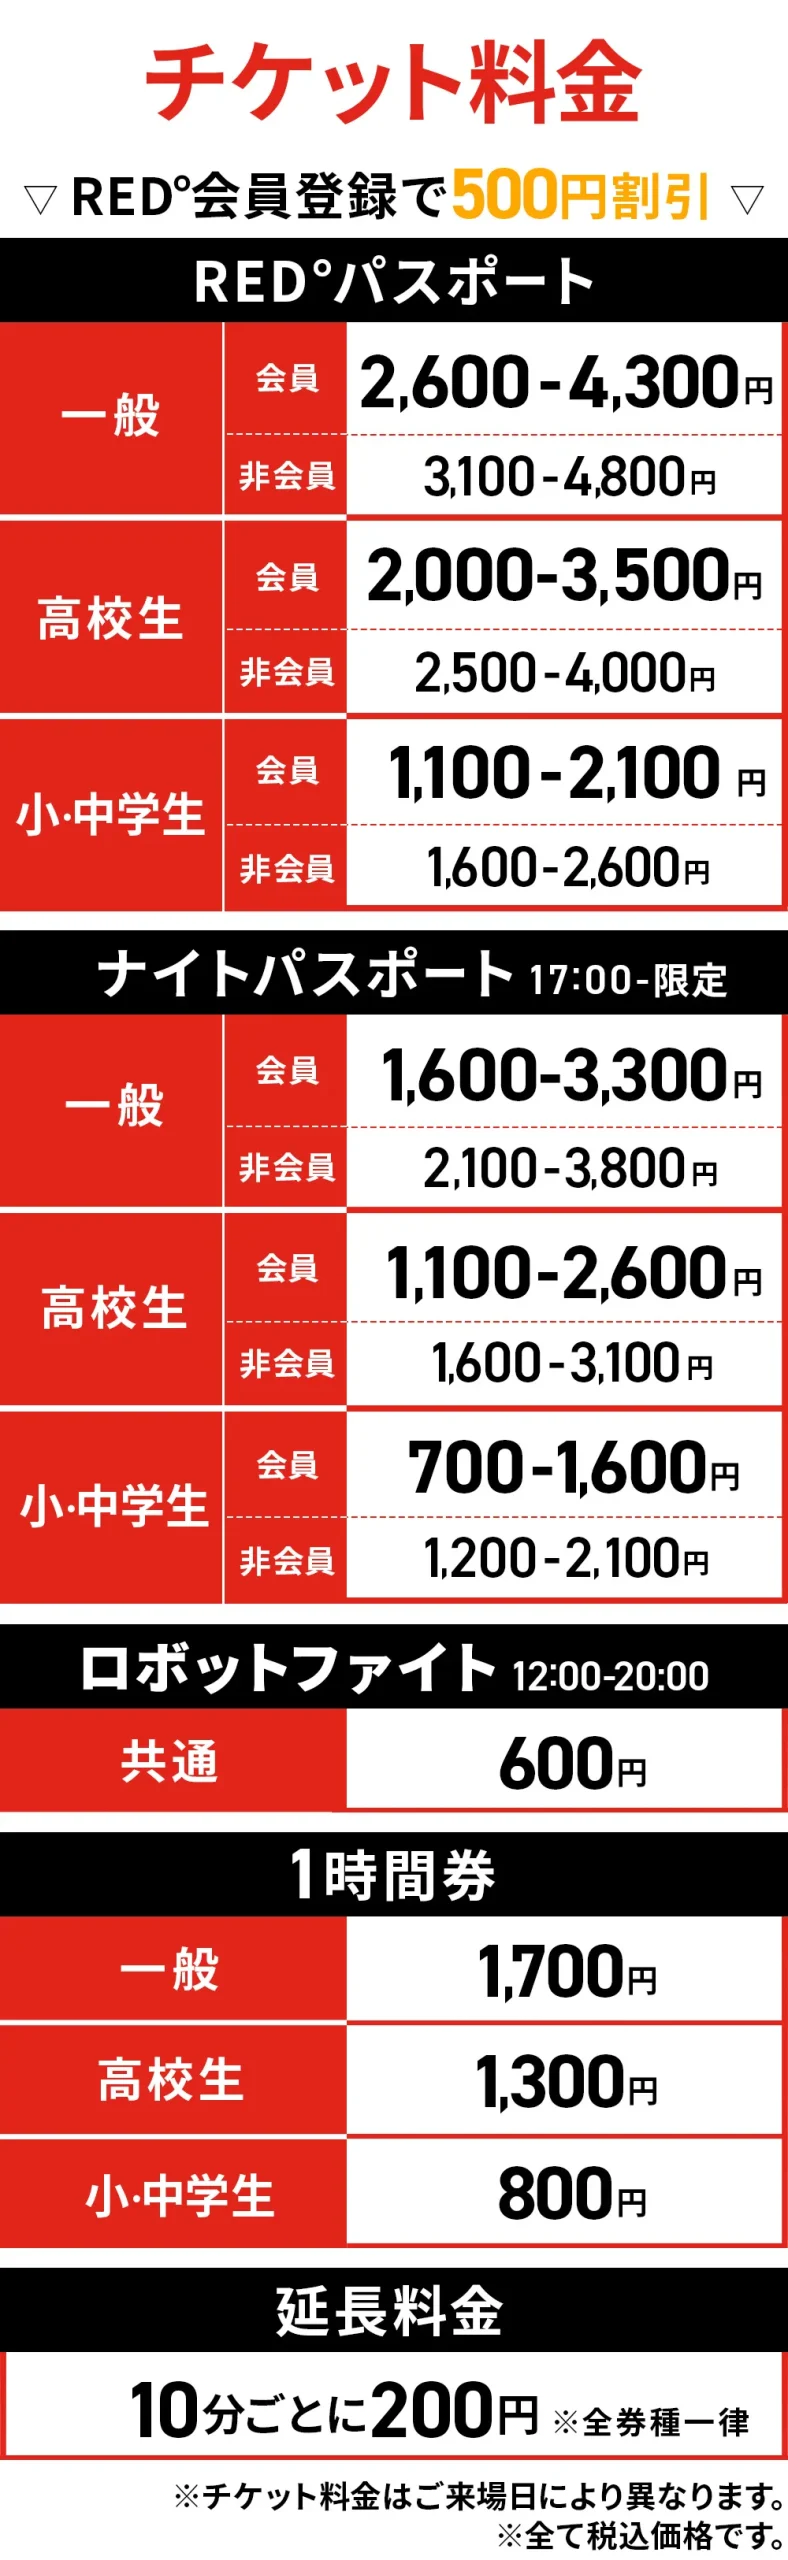 RED° TOKYO TOWER 3F/4F/5Fエリアご入場チケット